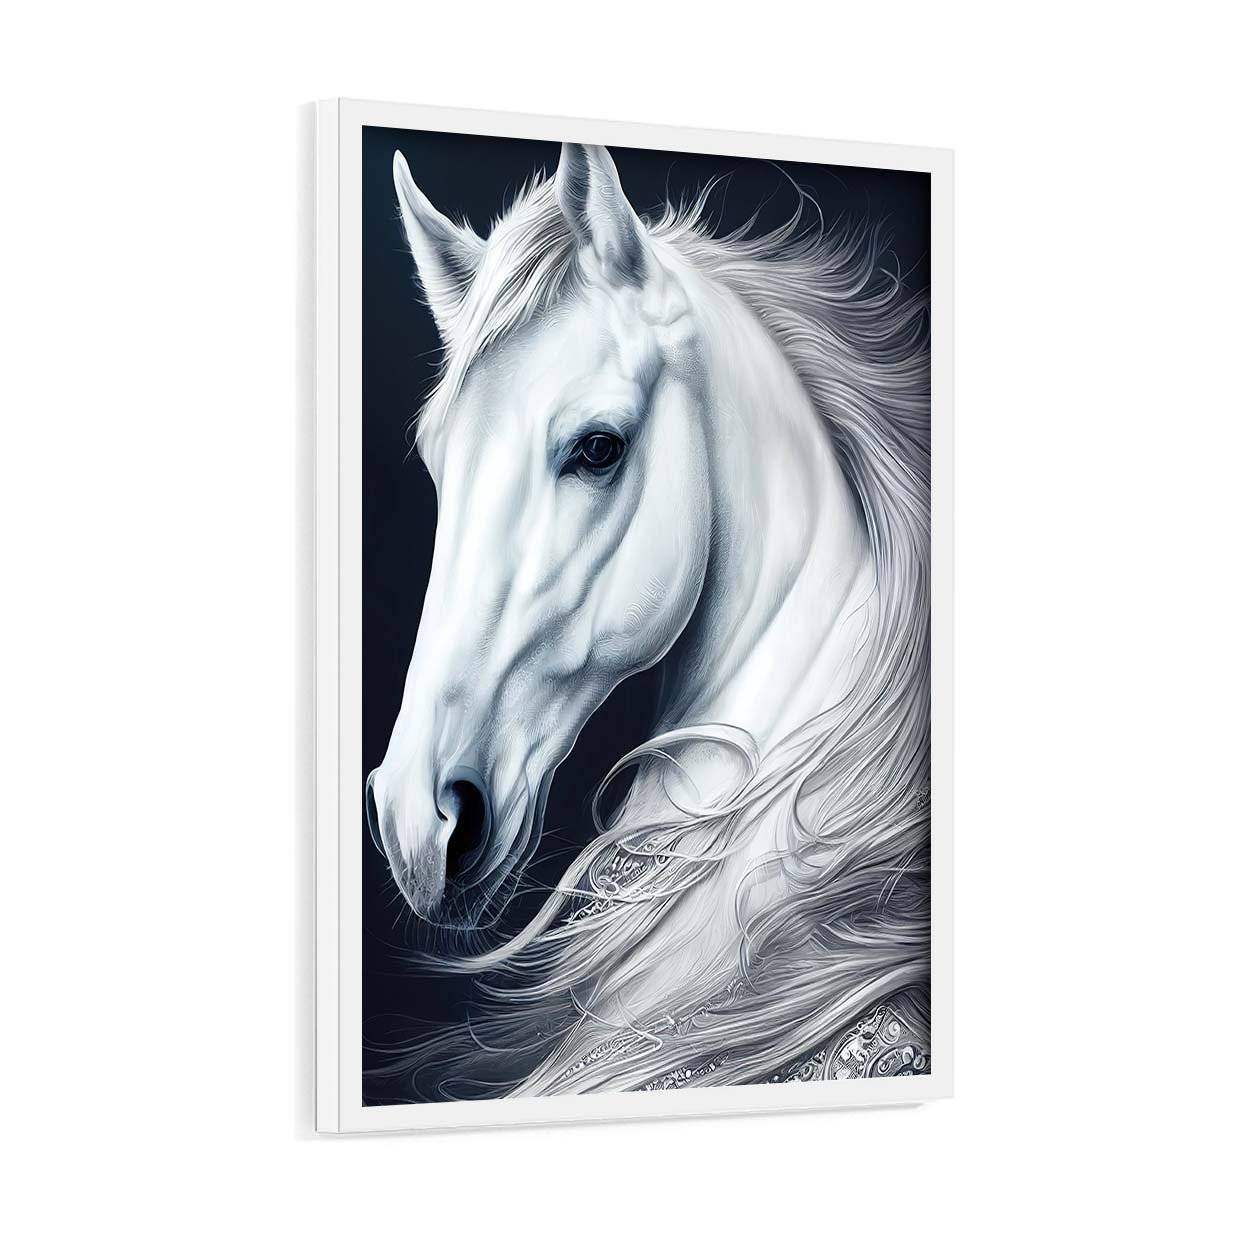 Quadro Decorativo Cavalo Branco Longa Crina 40x60 c Moldura:Branca